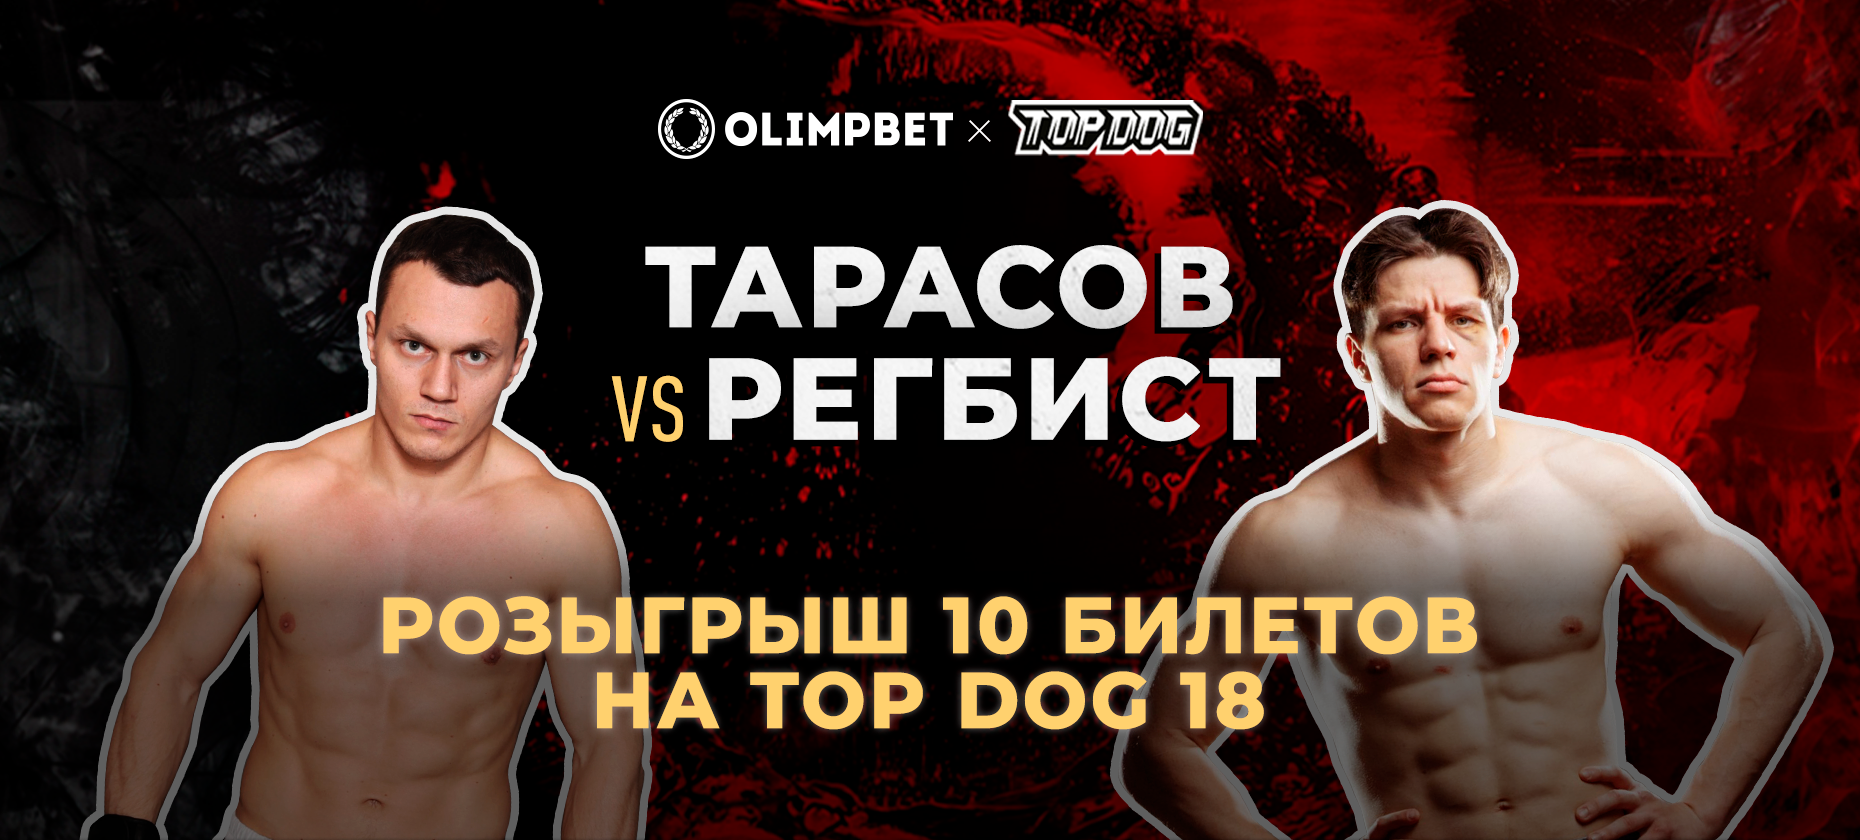 Olimpbet разыгрывает билеты на бой Регбист – Тарасов